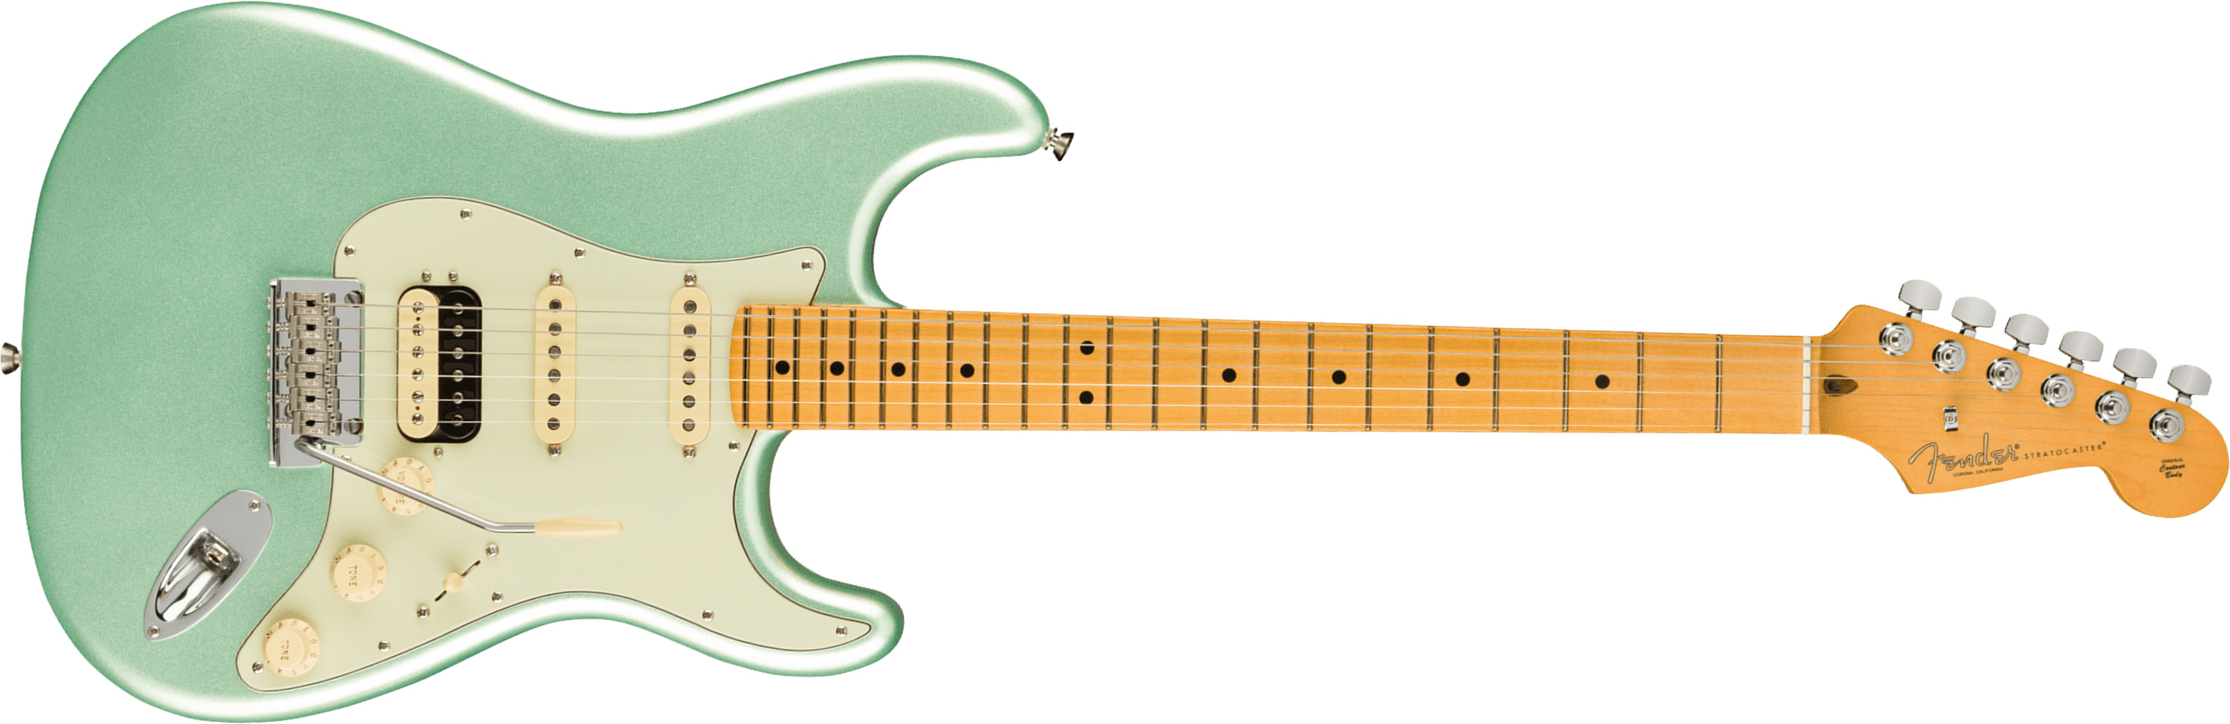 Fender Strat American Professional Ii Hss Usa Mn - Mystic Surf Green - Guitarra eléctrica con forma de str. - Main picture